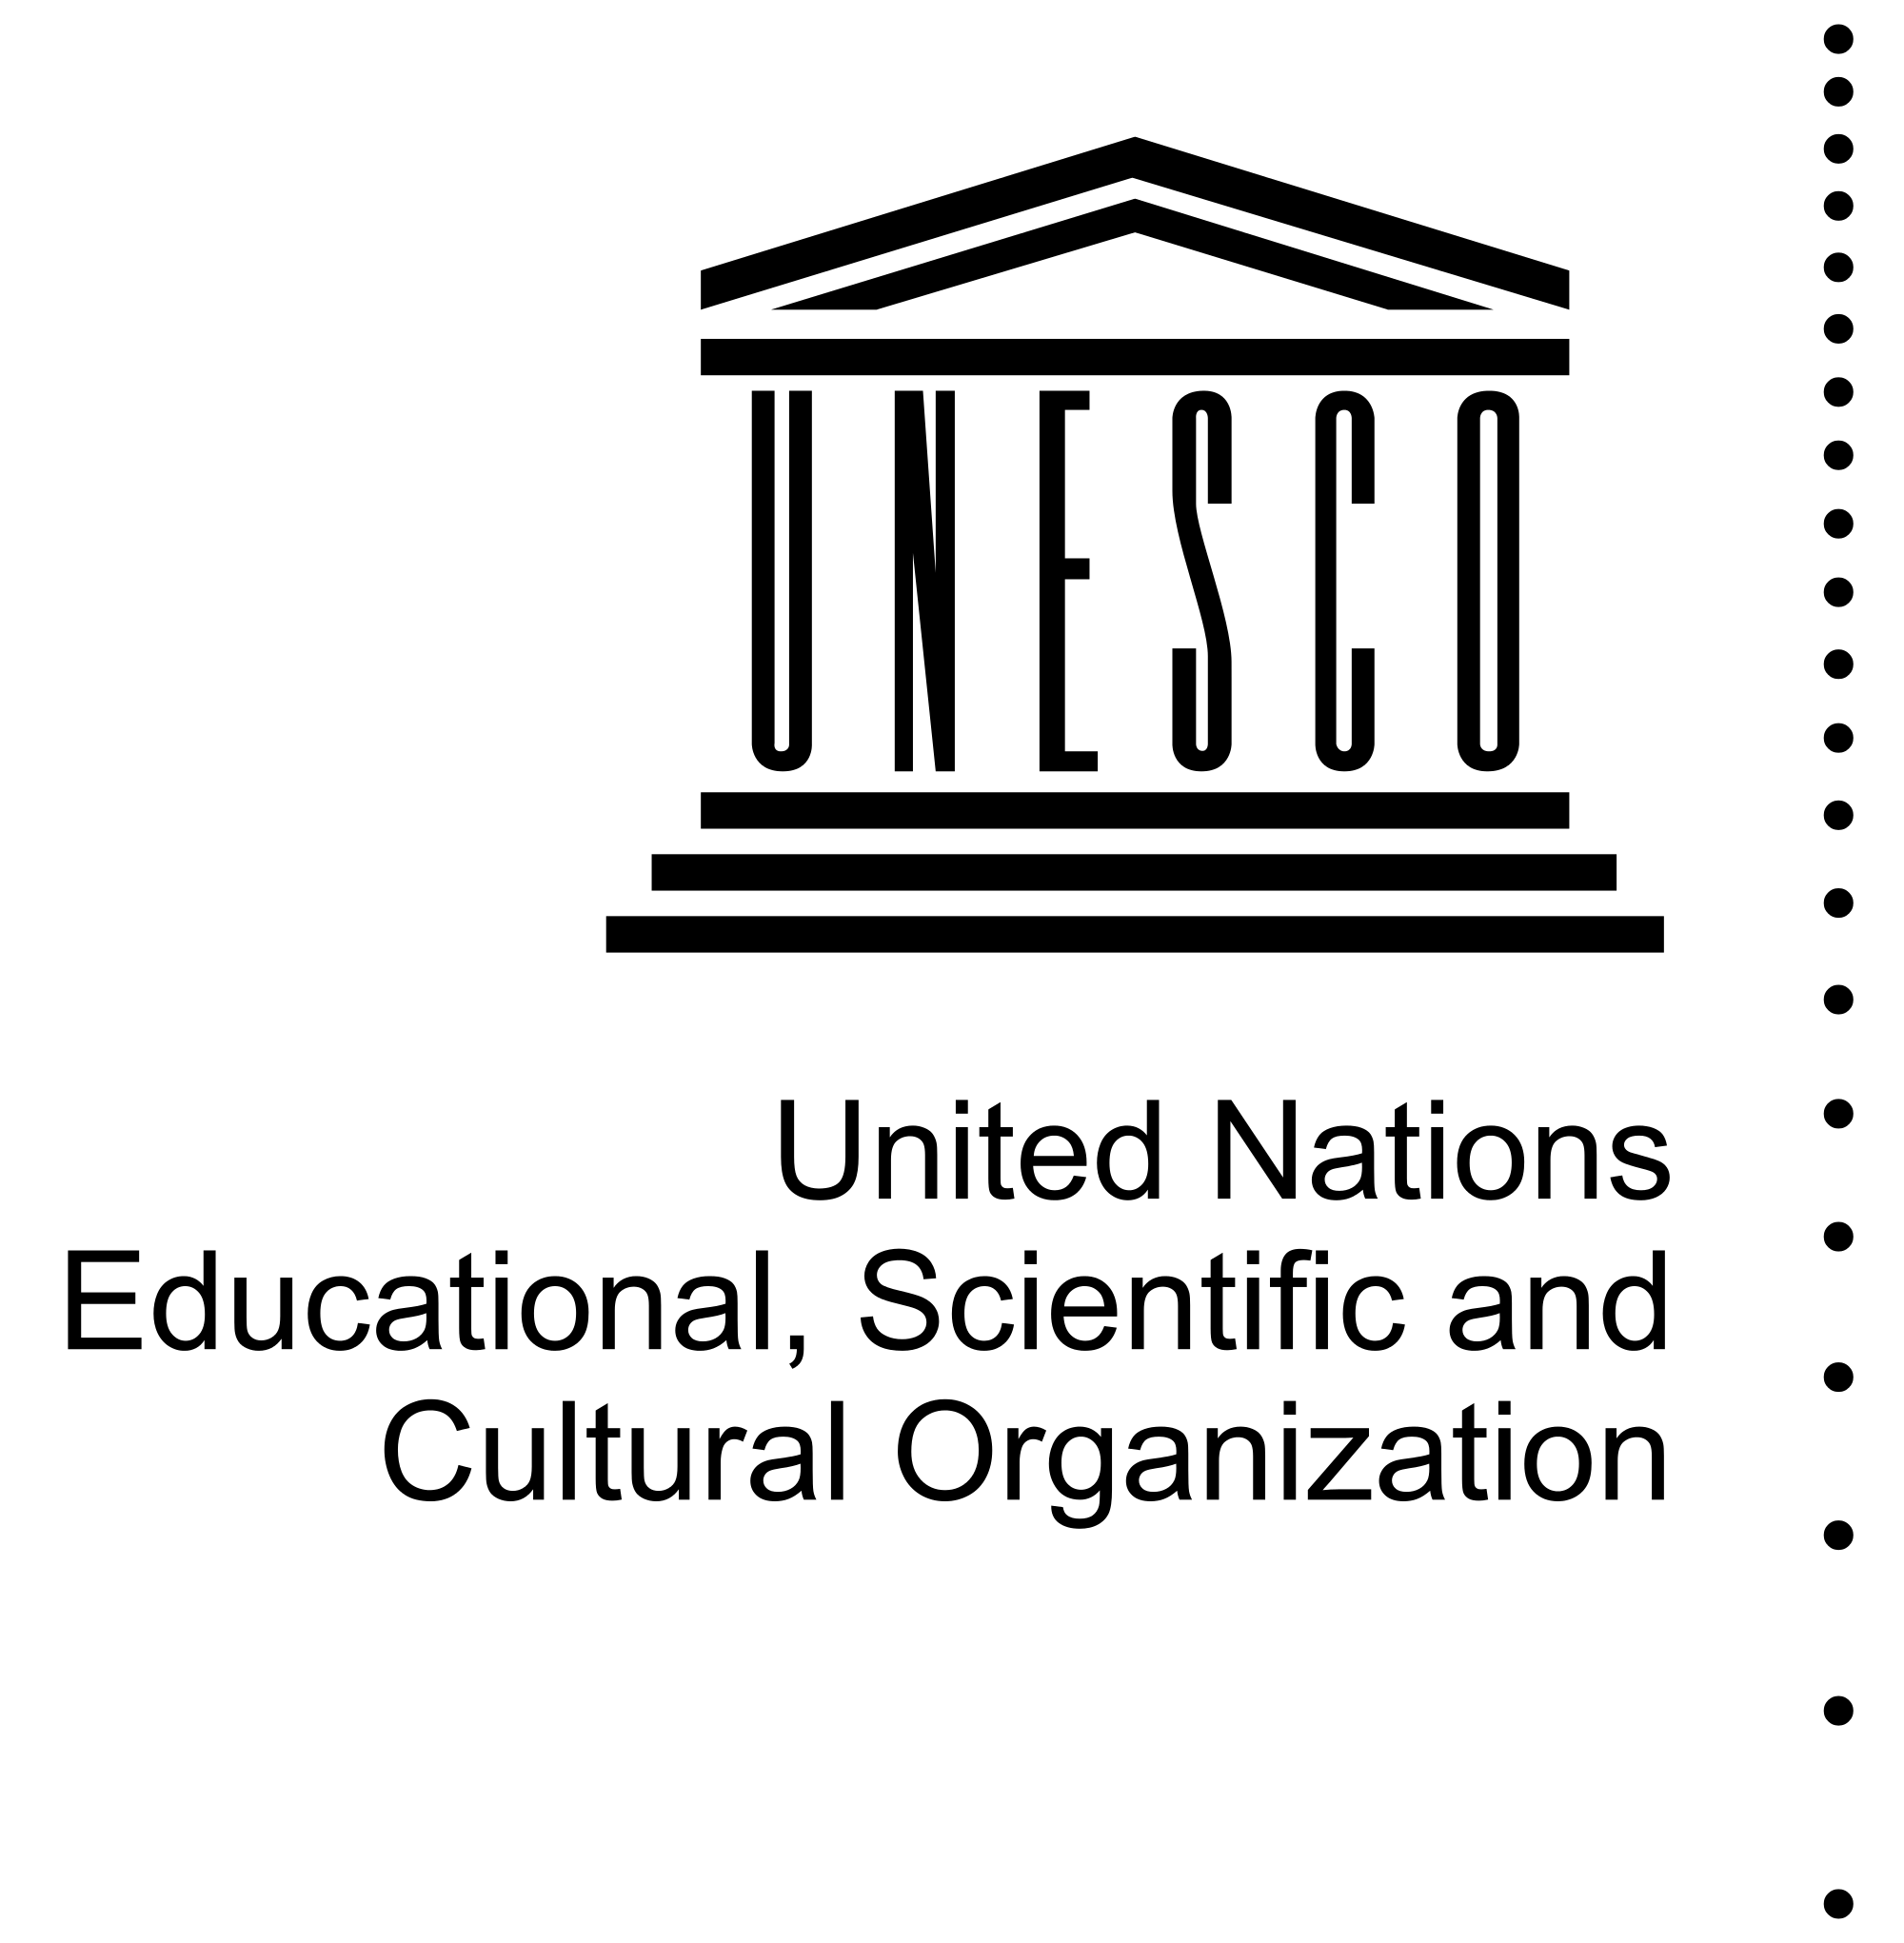 organizer(s) logo